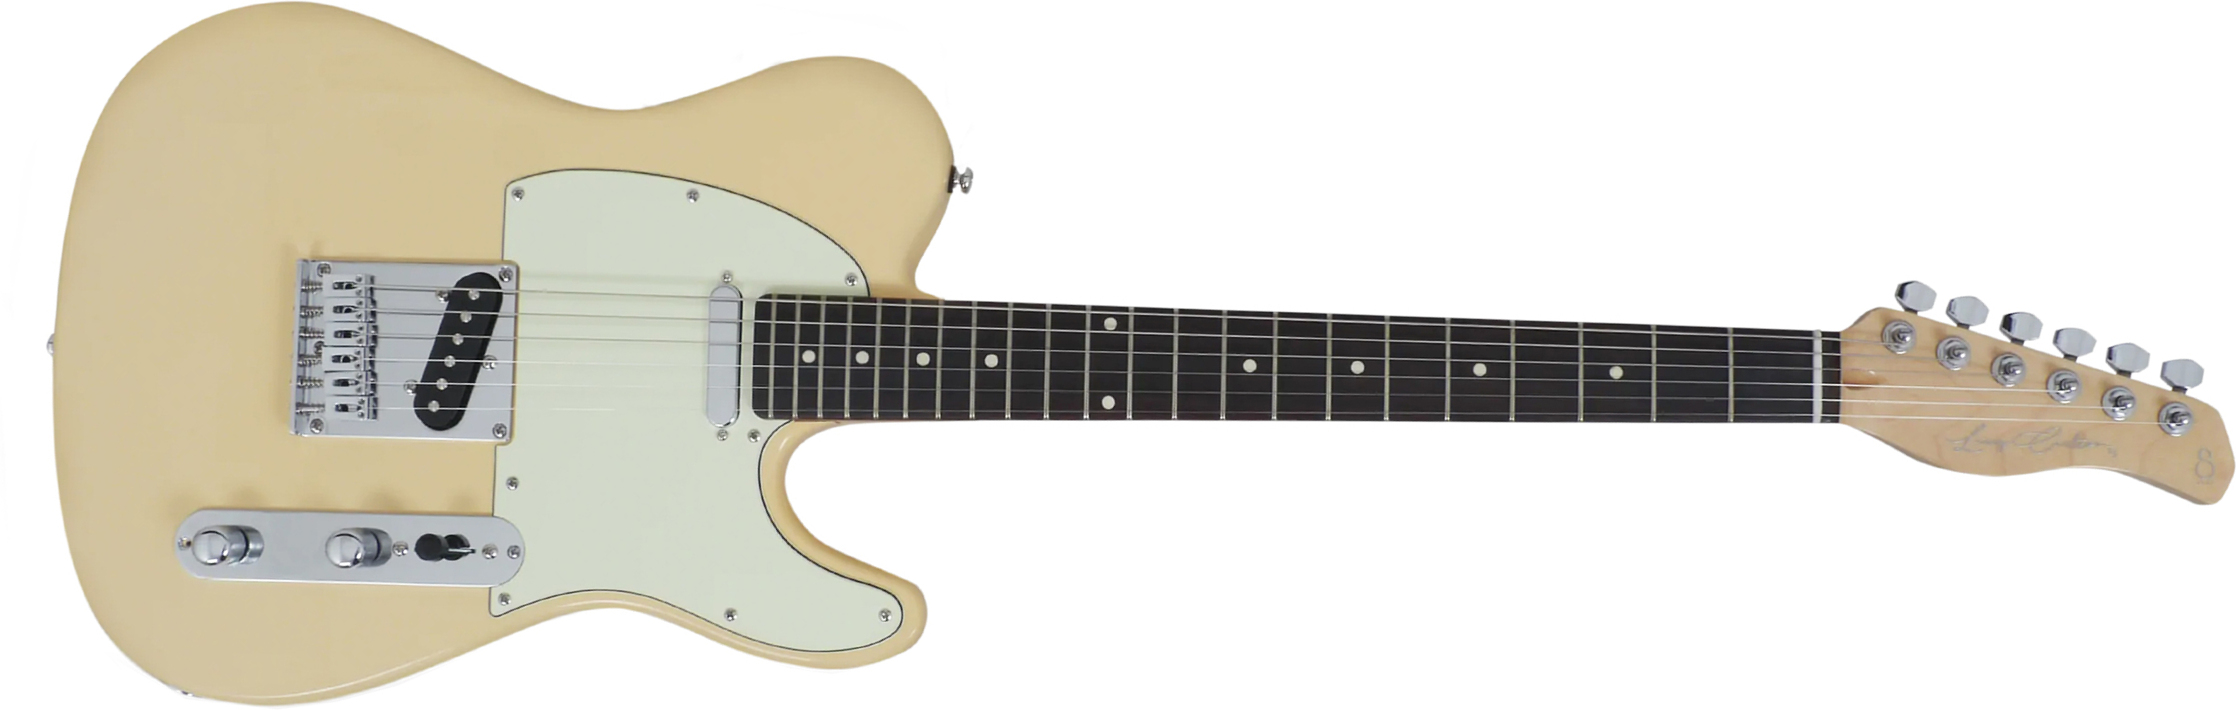 Sire Larry Carlton T3 Signature 2s Ht Rw - Vintage White - Televorm elektrische gitaar - Main picture